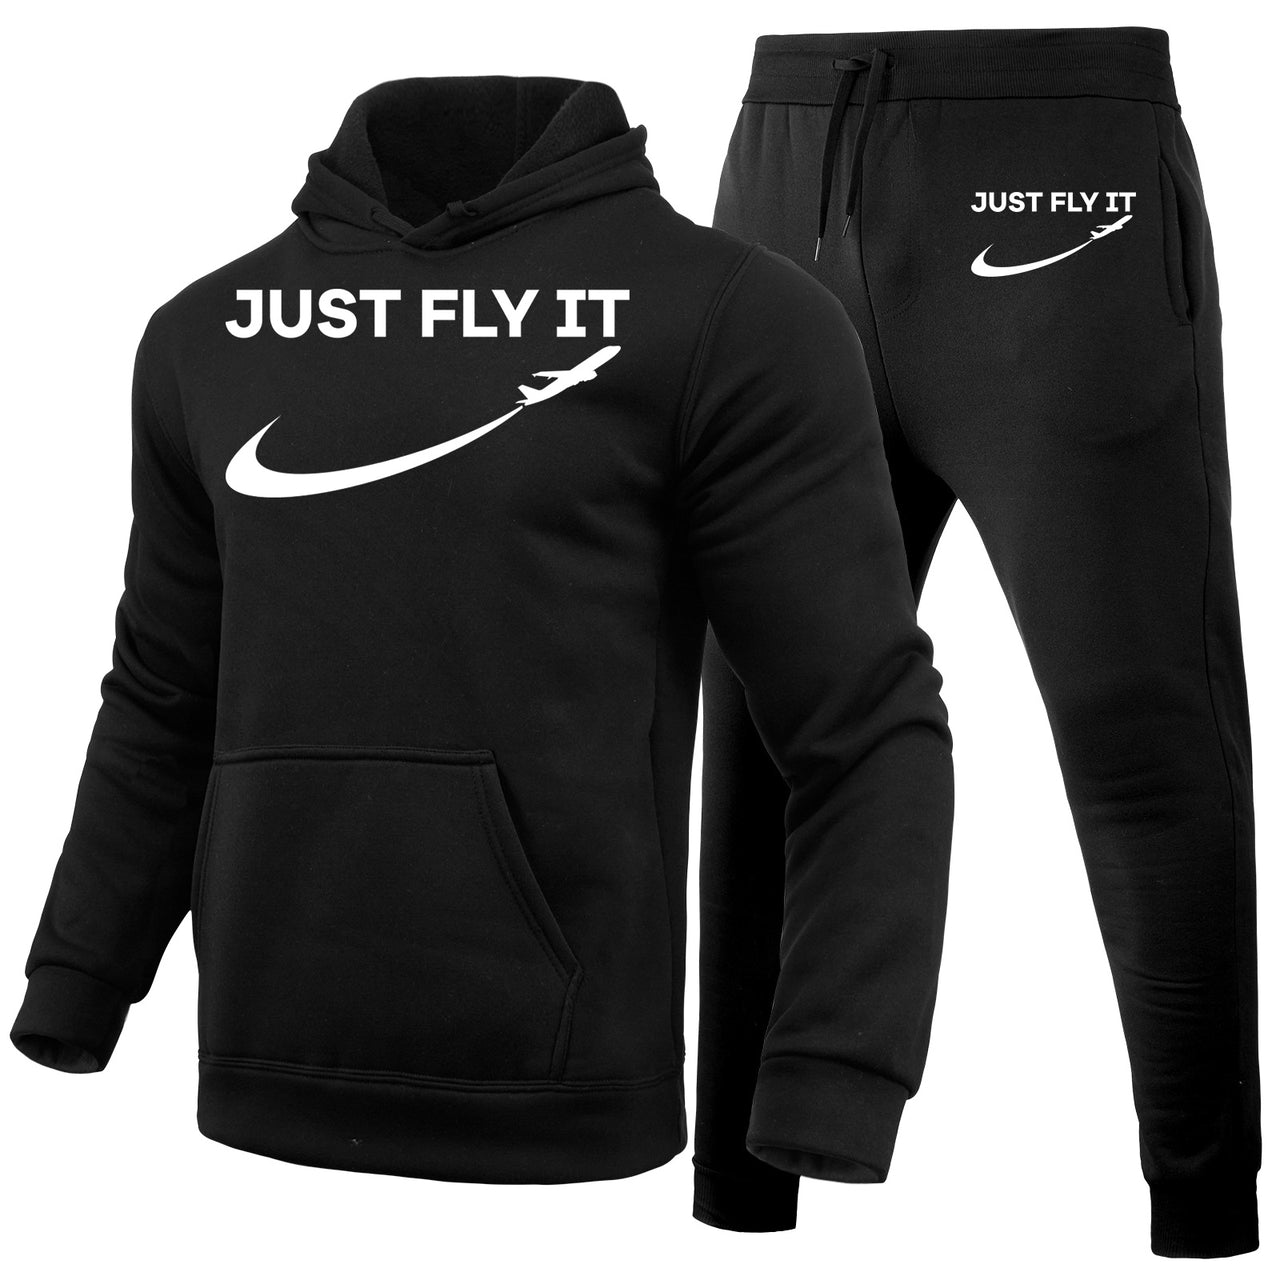 Just Fly It 2 Designed Hoodies & Sweatpants Set